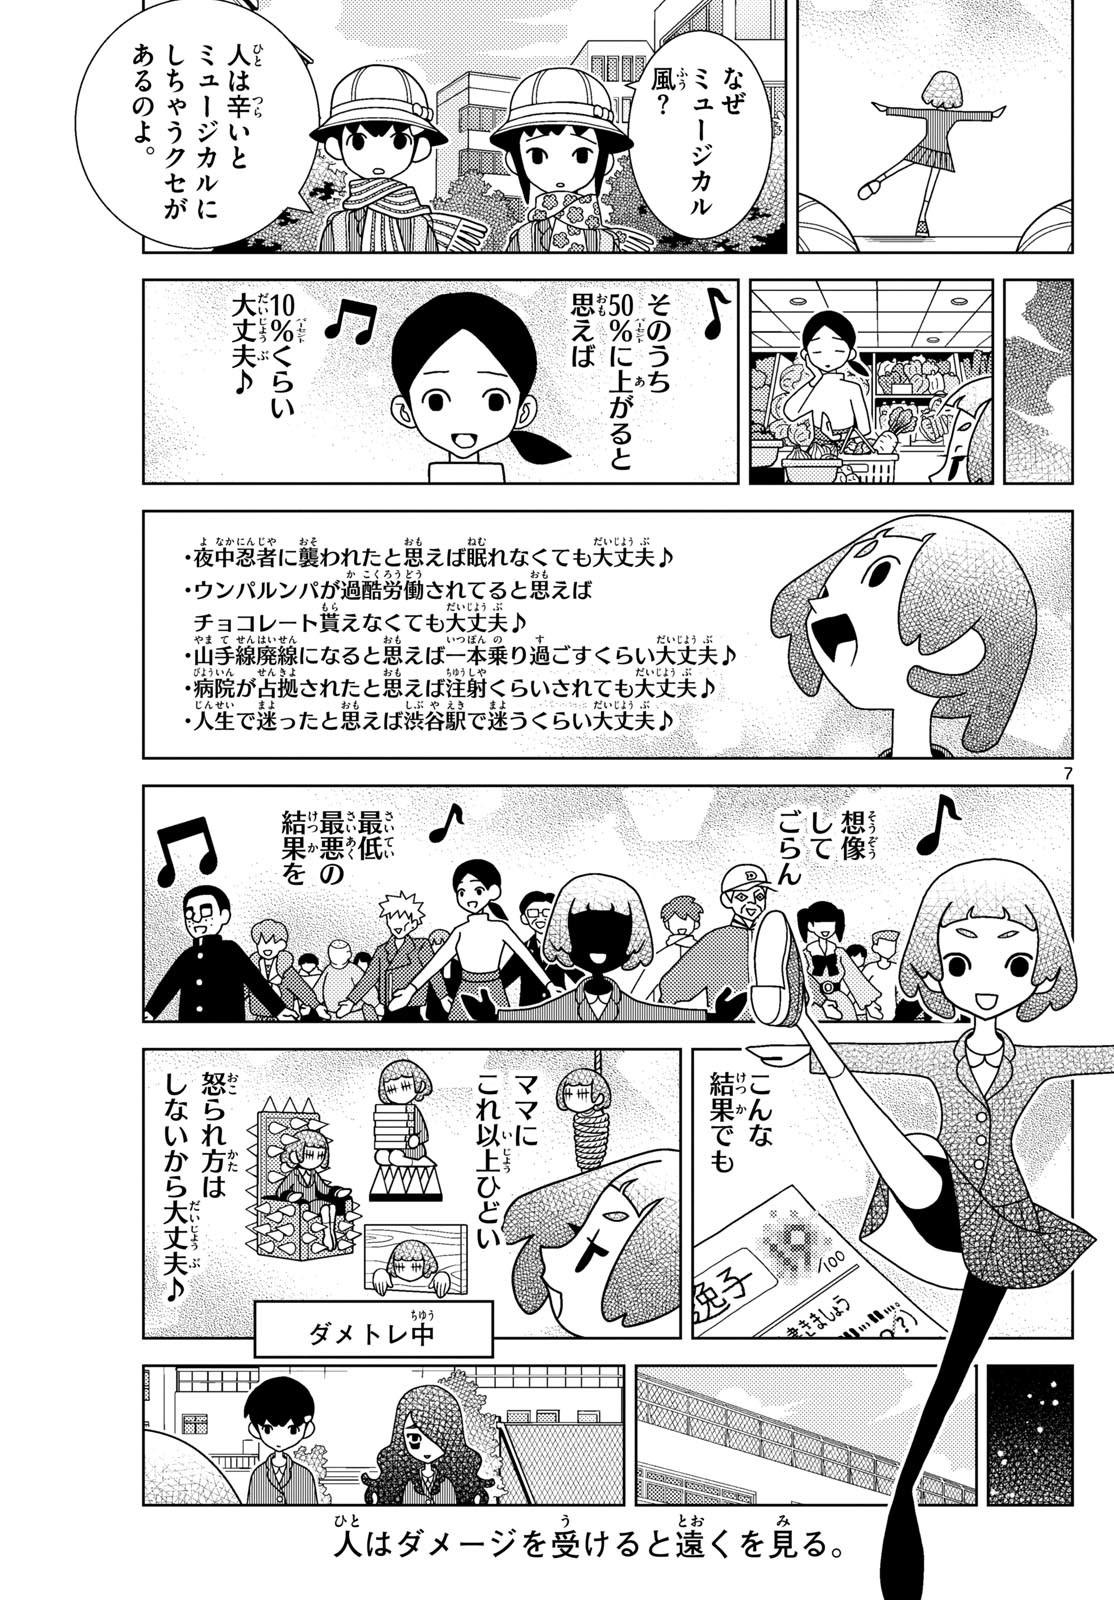 Shibuya Near Family - Chapter 086 - Page 7